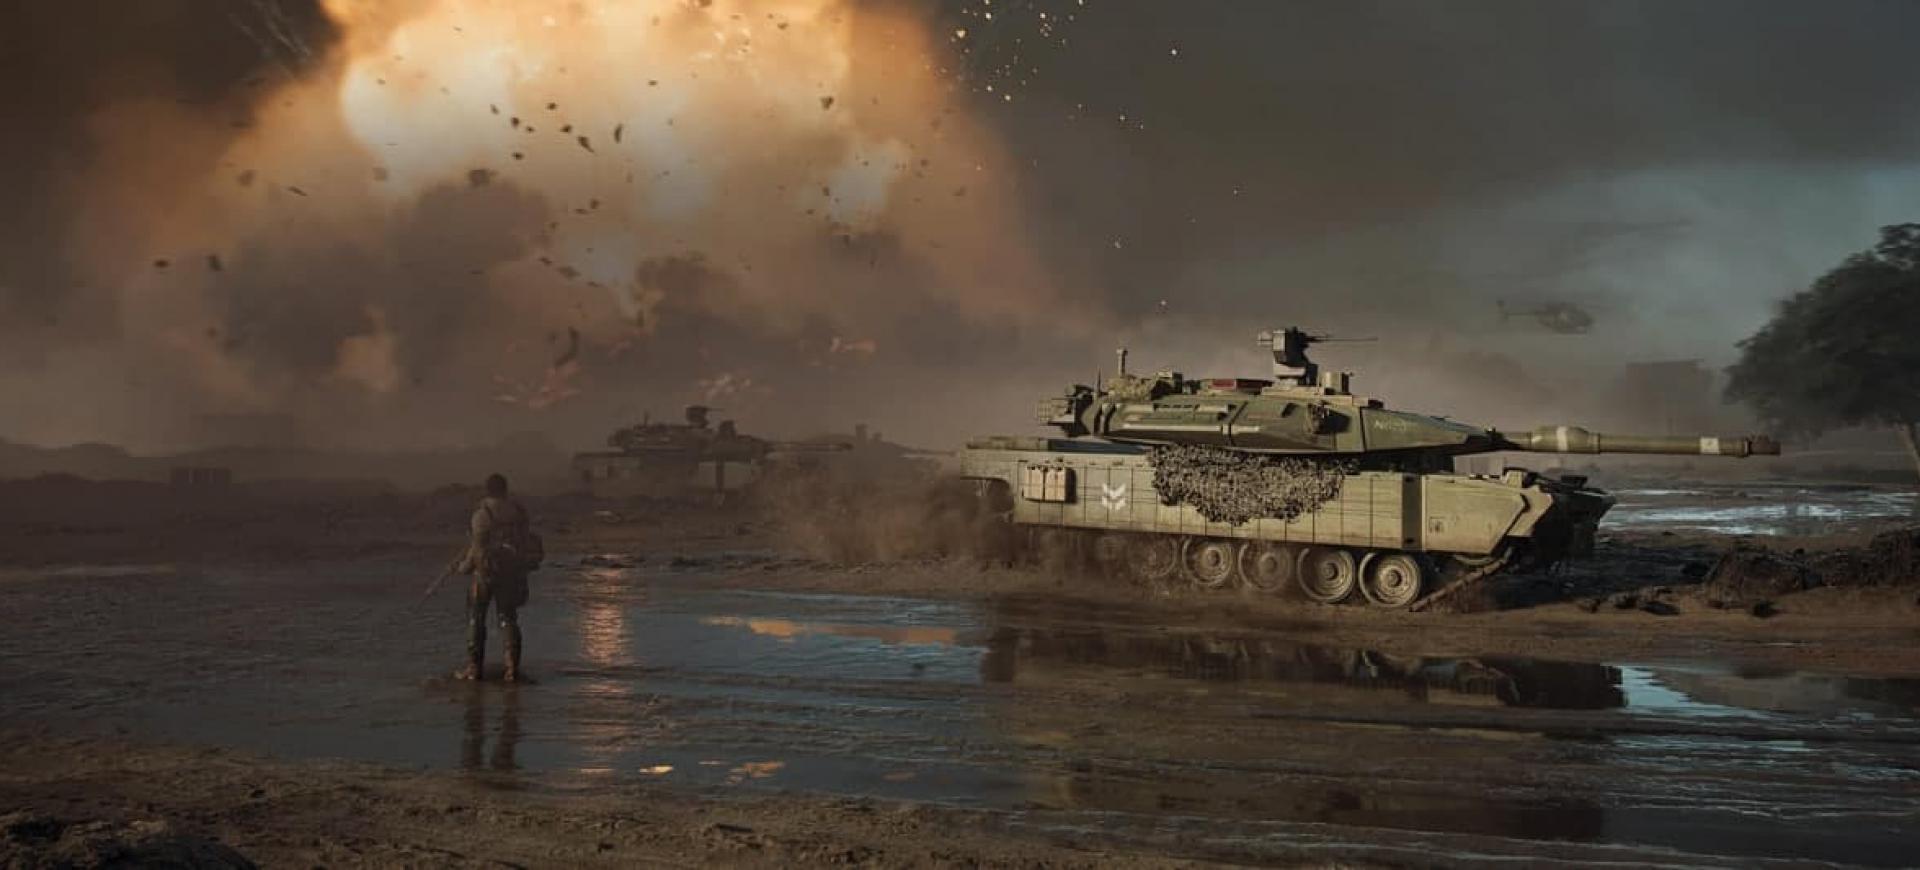 battlefield 2042 - بازی Battlefield 2042 به صورت رسمی معرفی شد